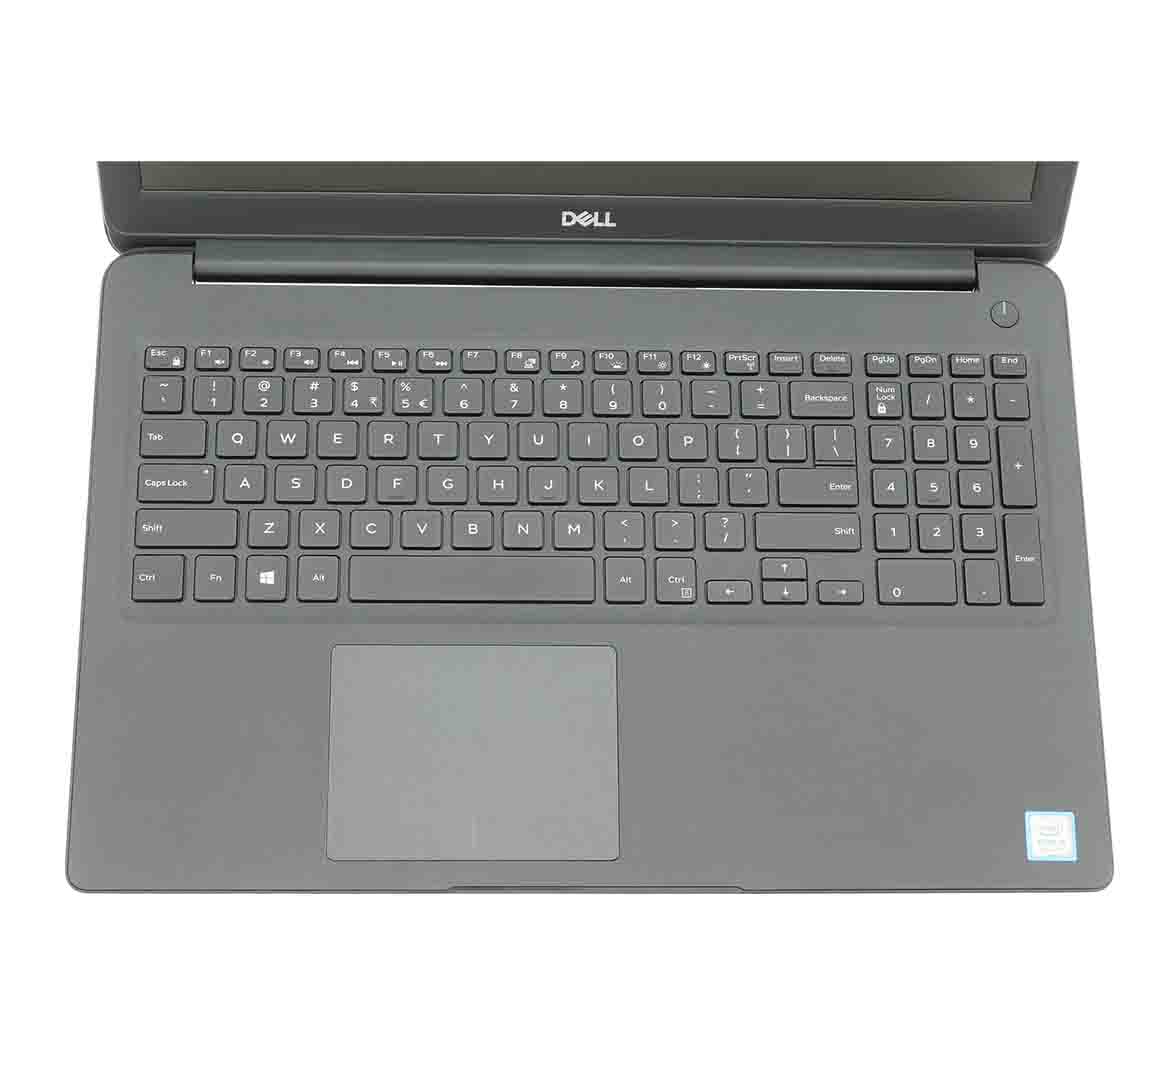 Dell Latitude 3500 Business Laptop, Intel Core i5-8th Generation CPU, 8GB RAM, 256GB SSD, 15.4 inch Display, Windows 10 Pro